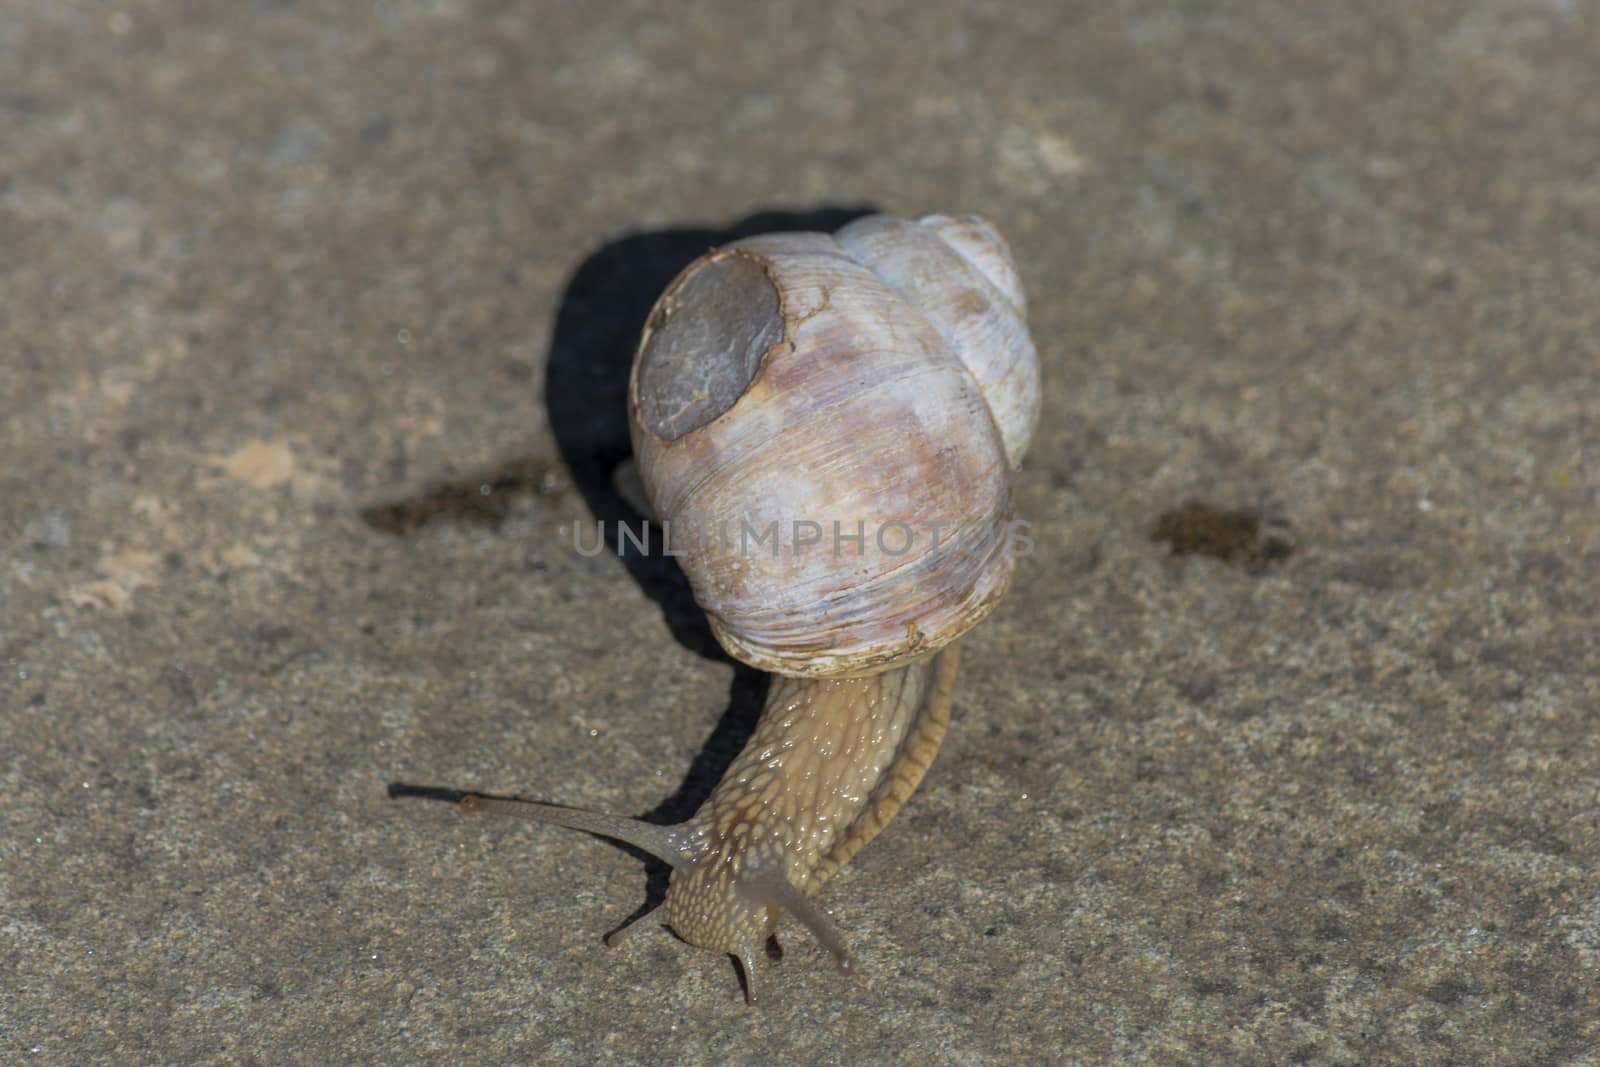 Roman snail - Helix pomatia. Helix pomatia, common names of the Romans, Burgundians, slug with injured casings